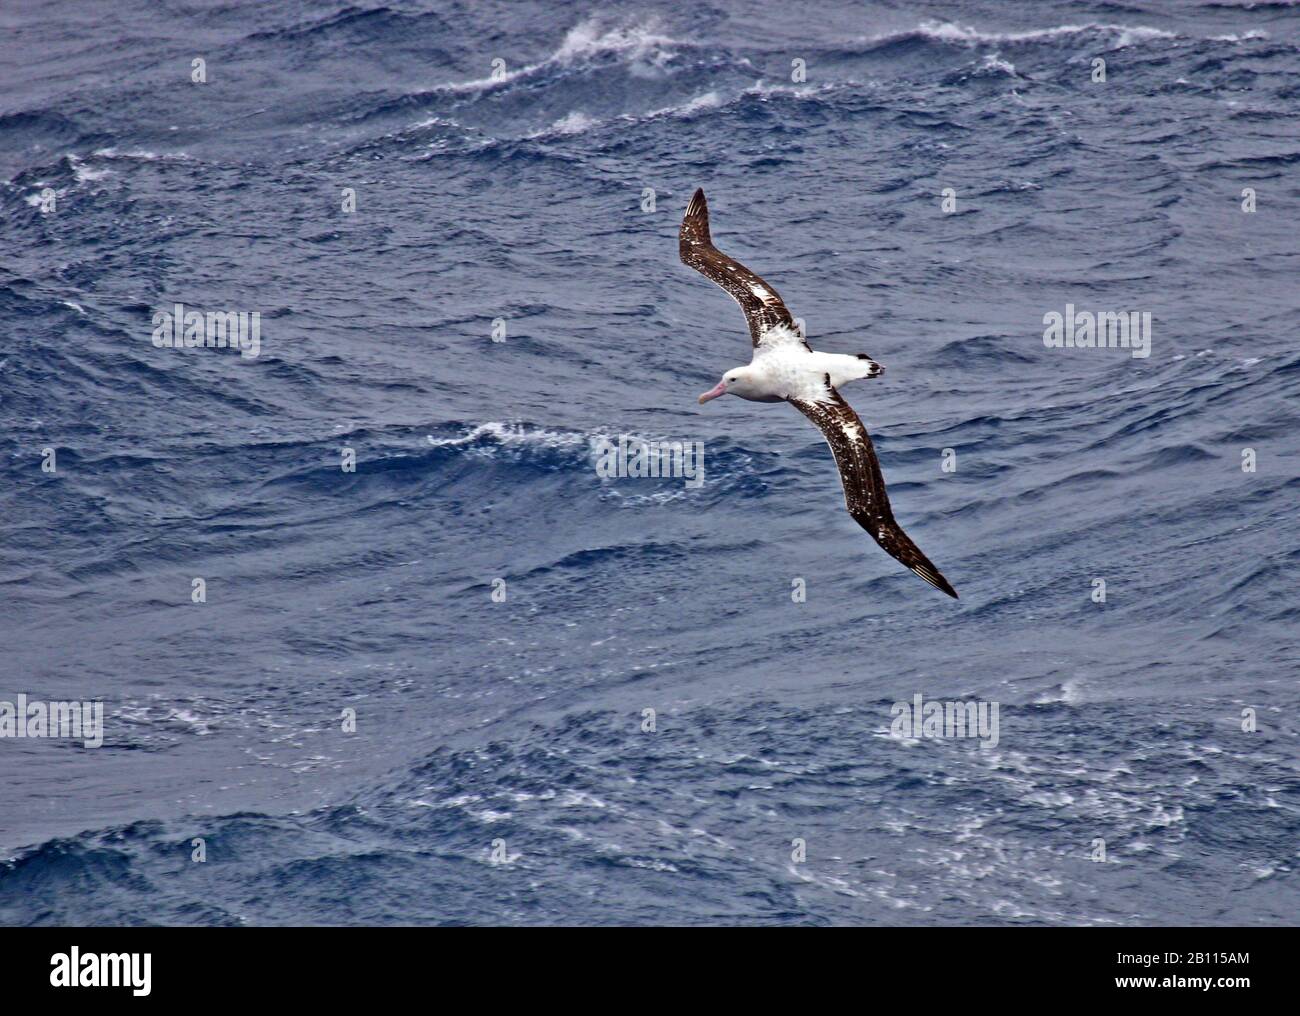 Gibson's albatross (Diomedea gibsoni), flying over the ocean, New Zealand Stock Photo